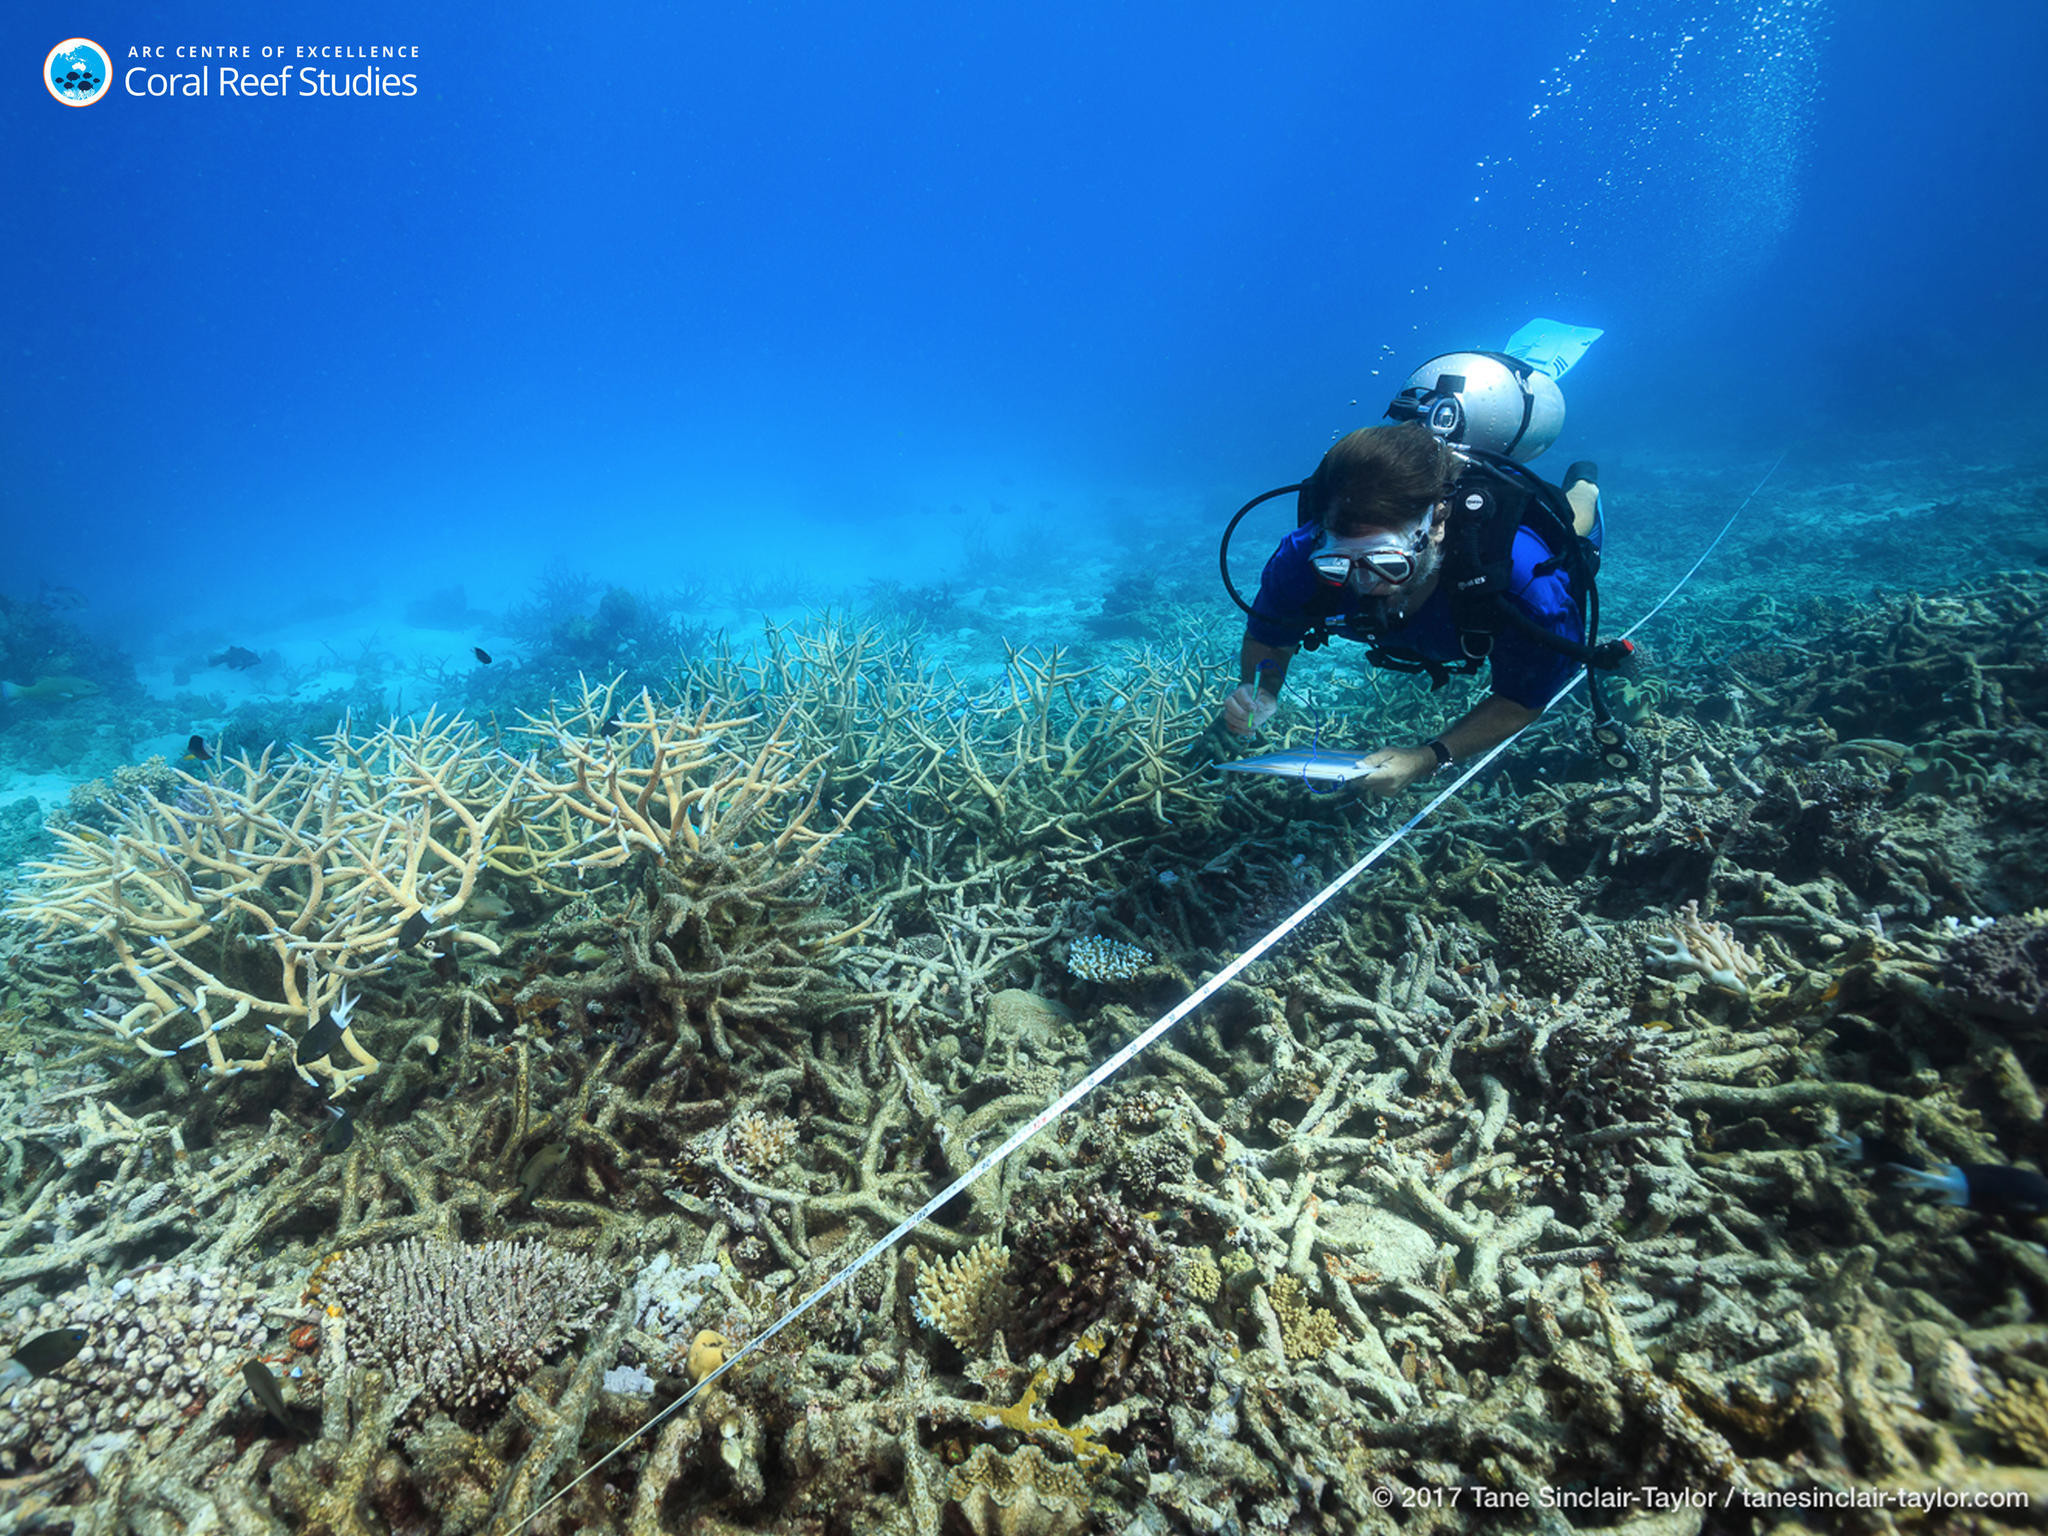 2048x1536 Korallen am Great Barrier Reef sind bereits in groÃen Teilen tot | STERN.de